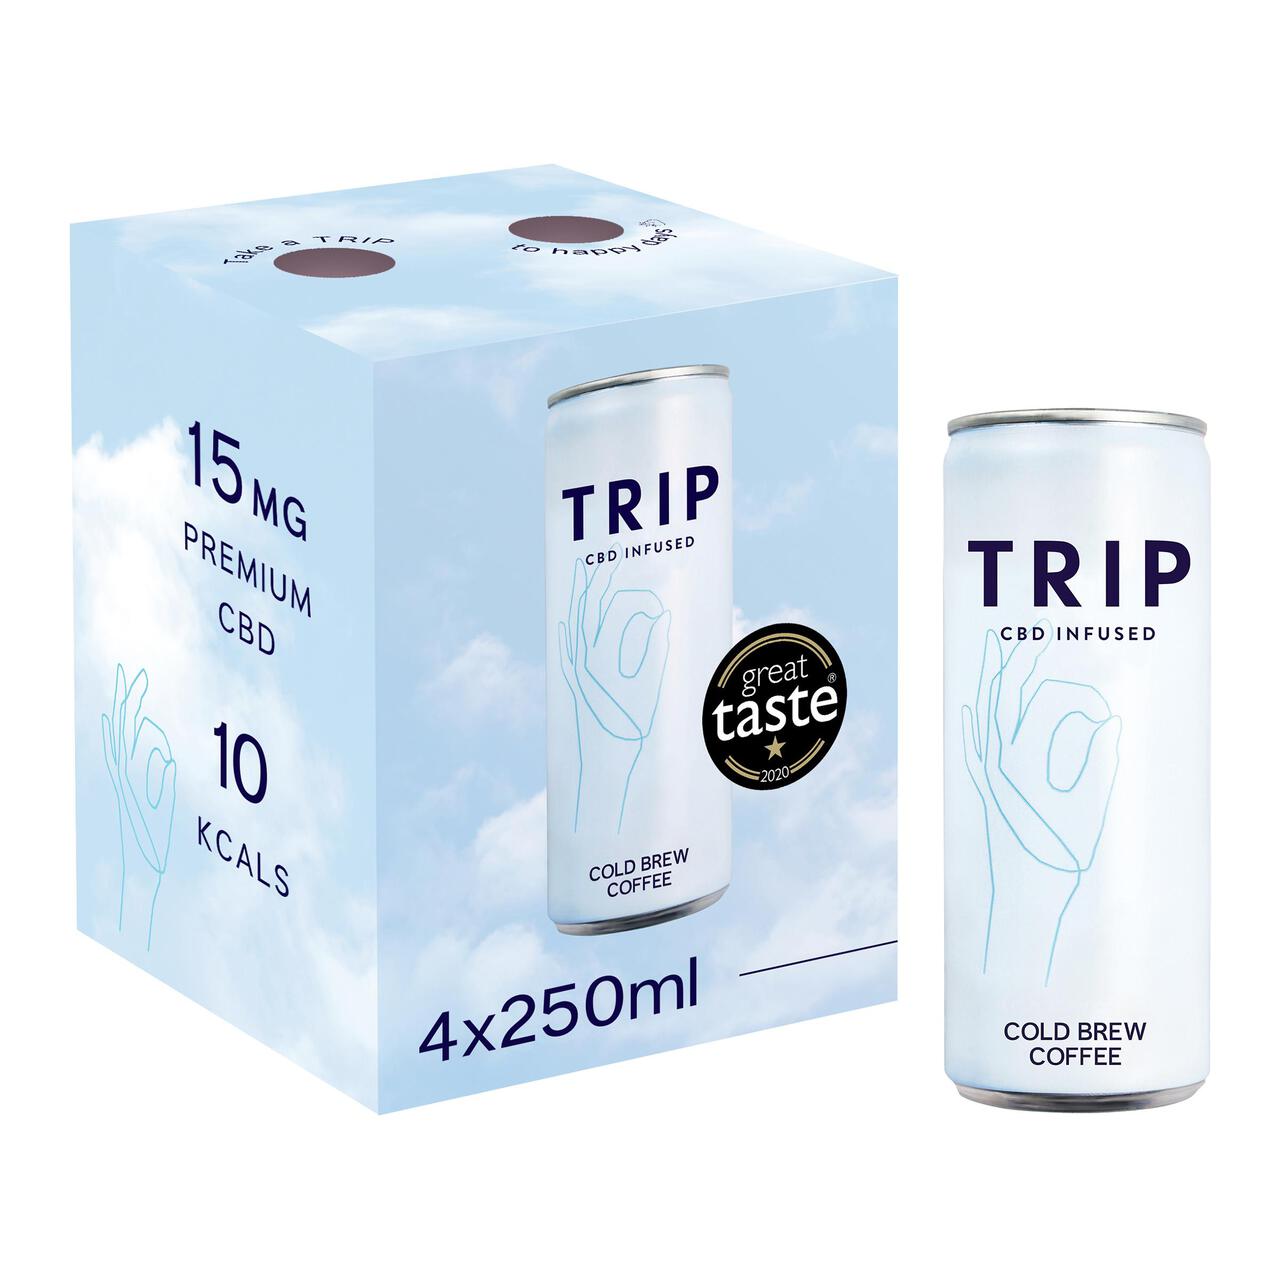 TRIP CBD Infused Cold Brew Coffee (4 x 250ml) 4 x 250ml